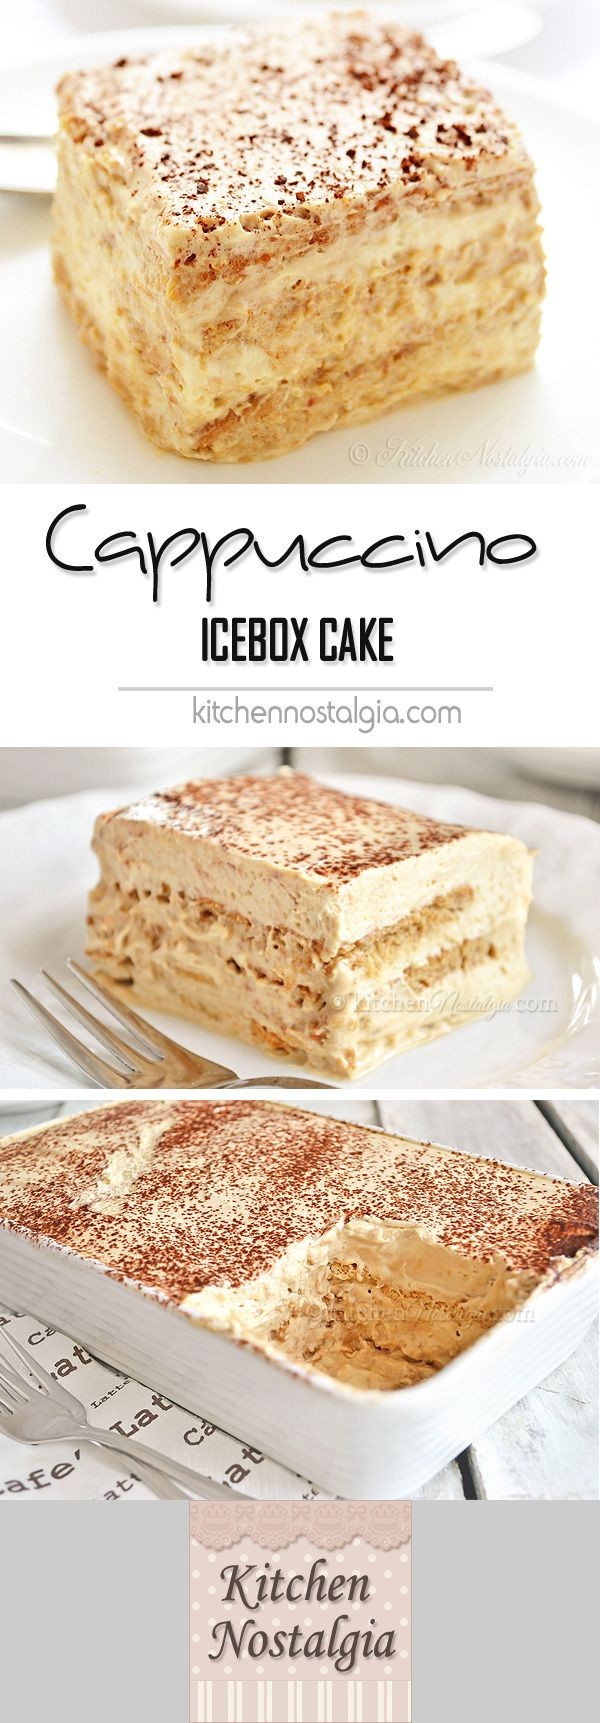 Cappuccino Icebox Cake